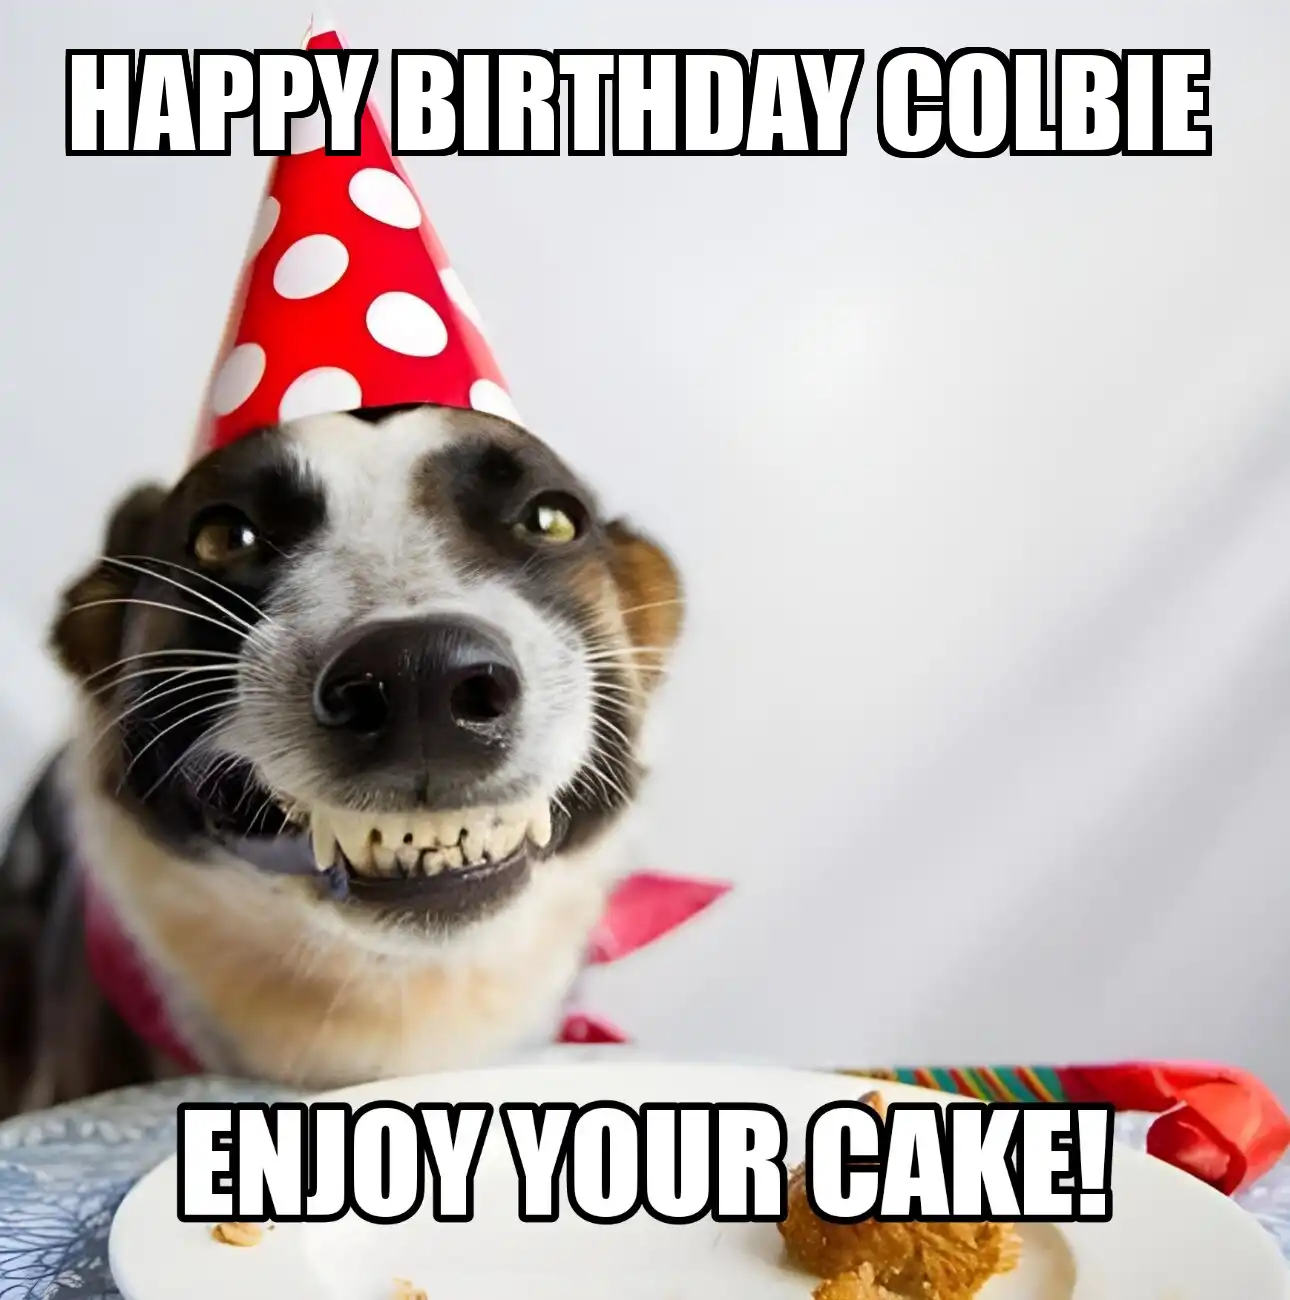 Happy Birthday Colbie Enjoy Your Cake Dog Meme